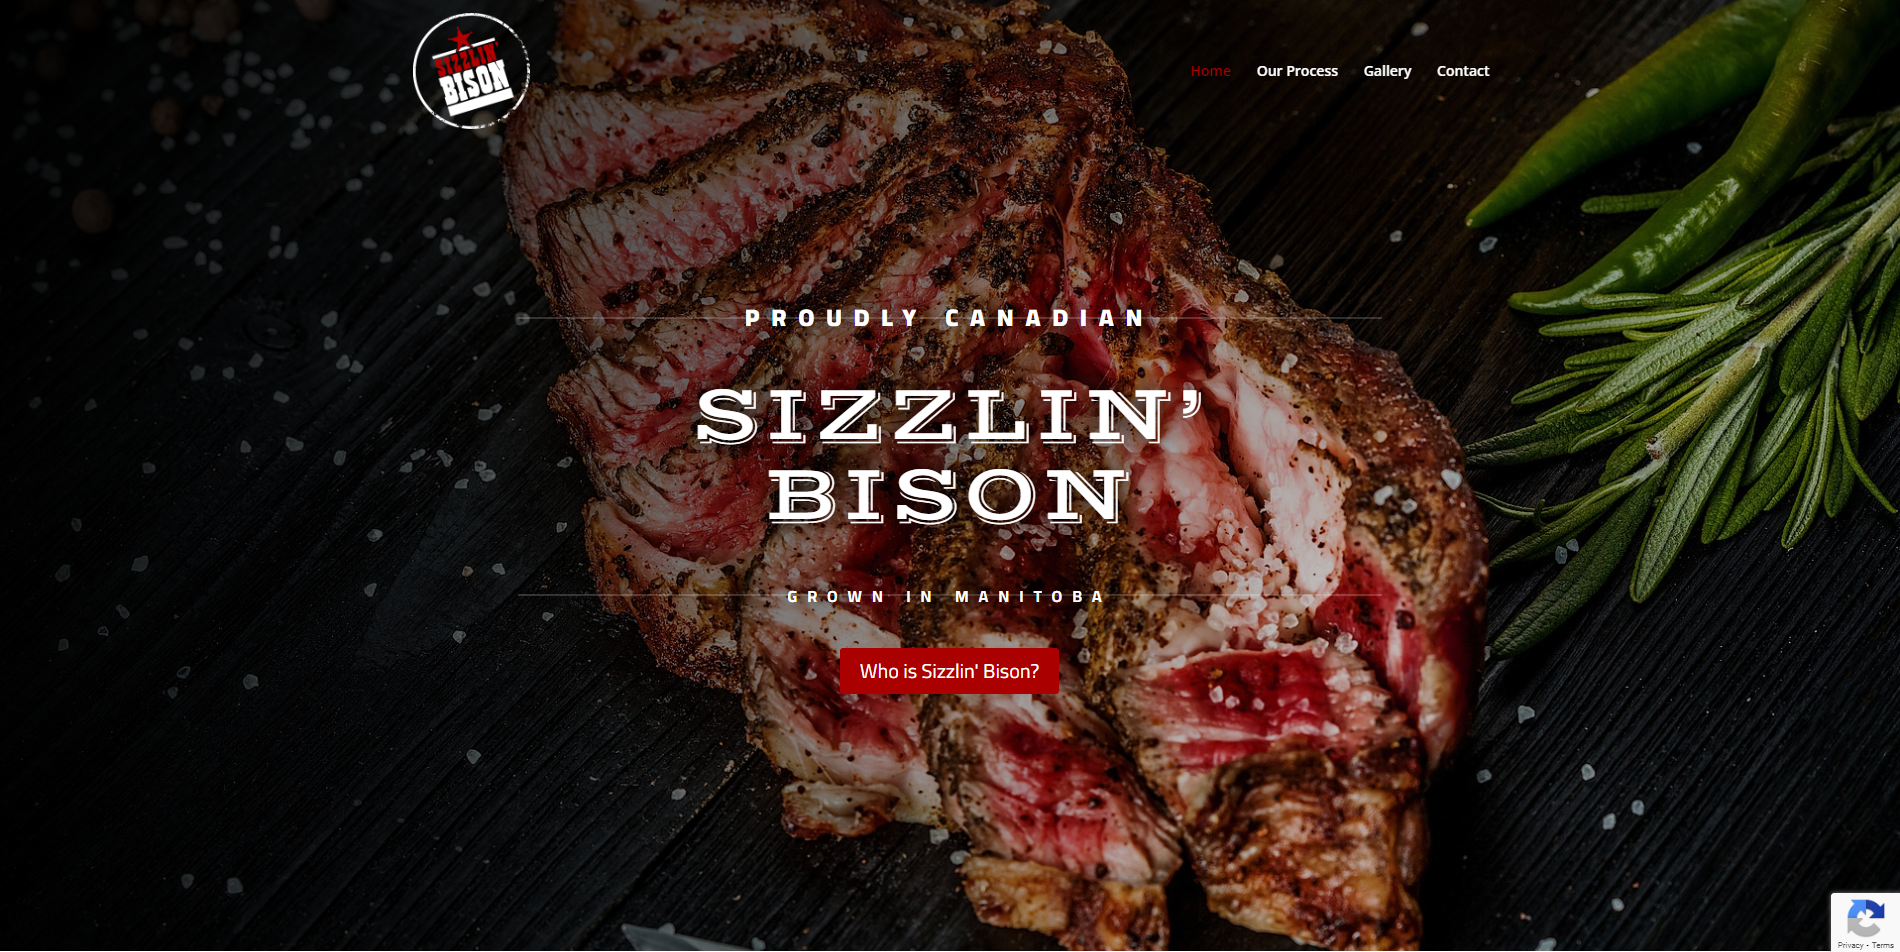 Sizzlin' Bison Website Design. Proudly Canadian Grown in Manitoba. Website Build.